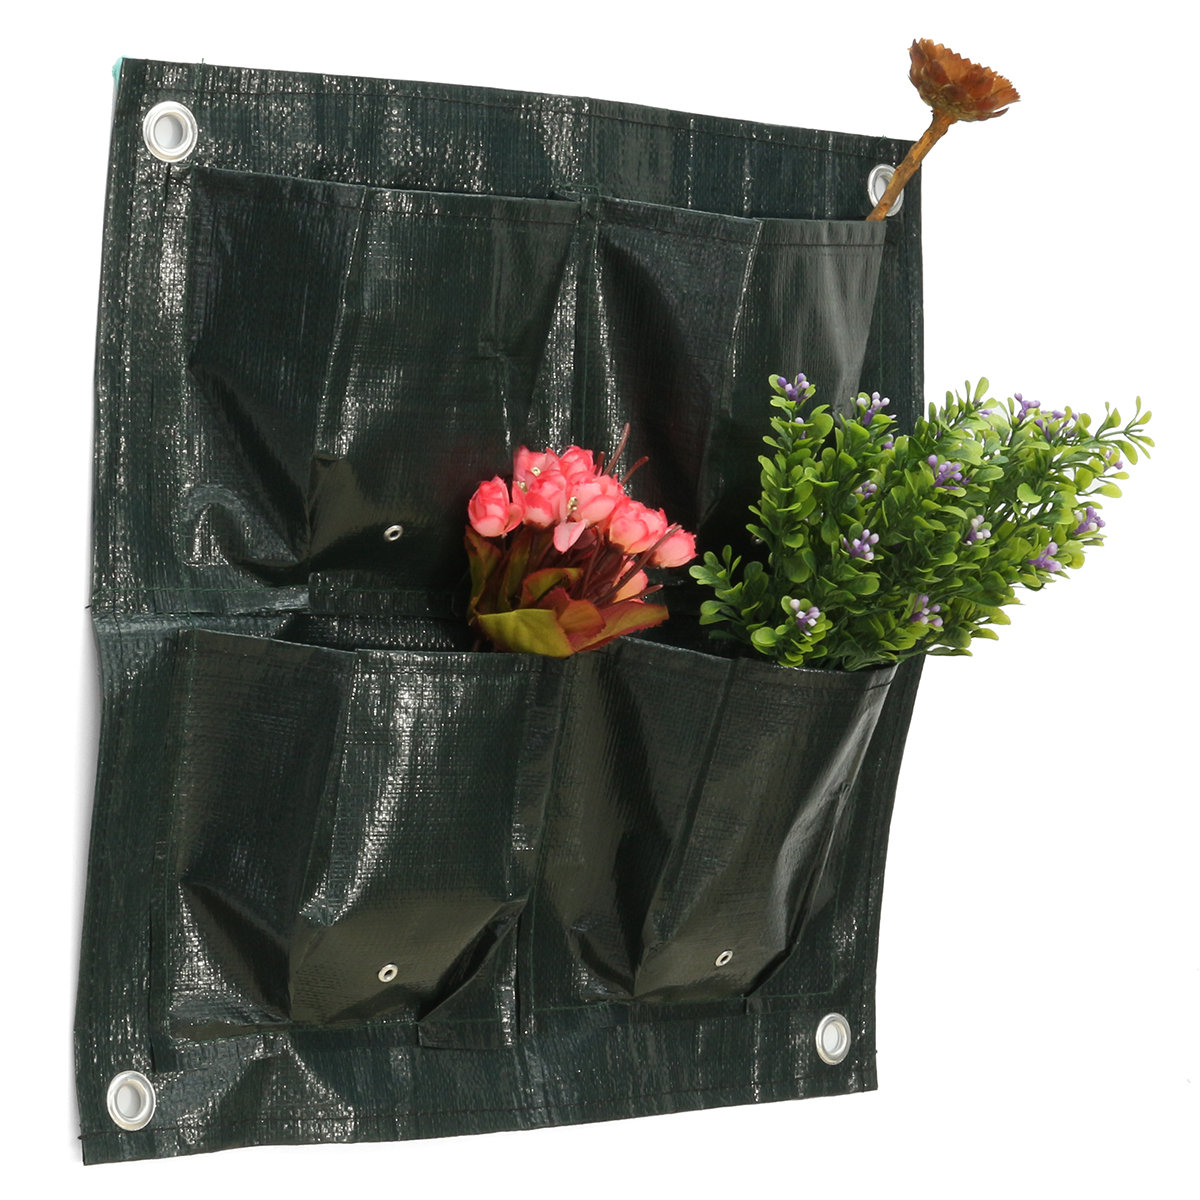 42x42cm 4 Pockets Garden Flowers Plants Planting Bag Grow Bags Pot